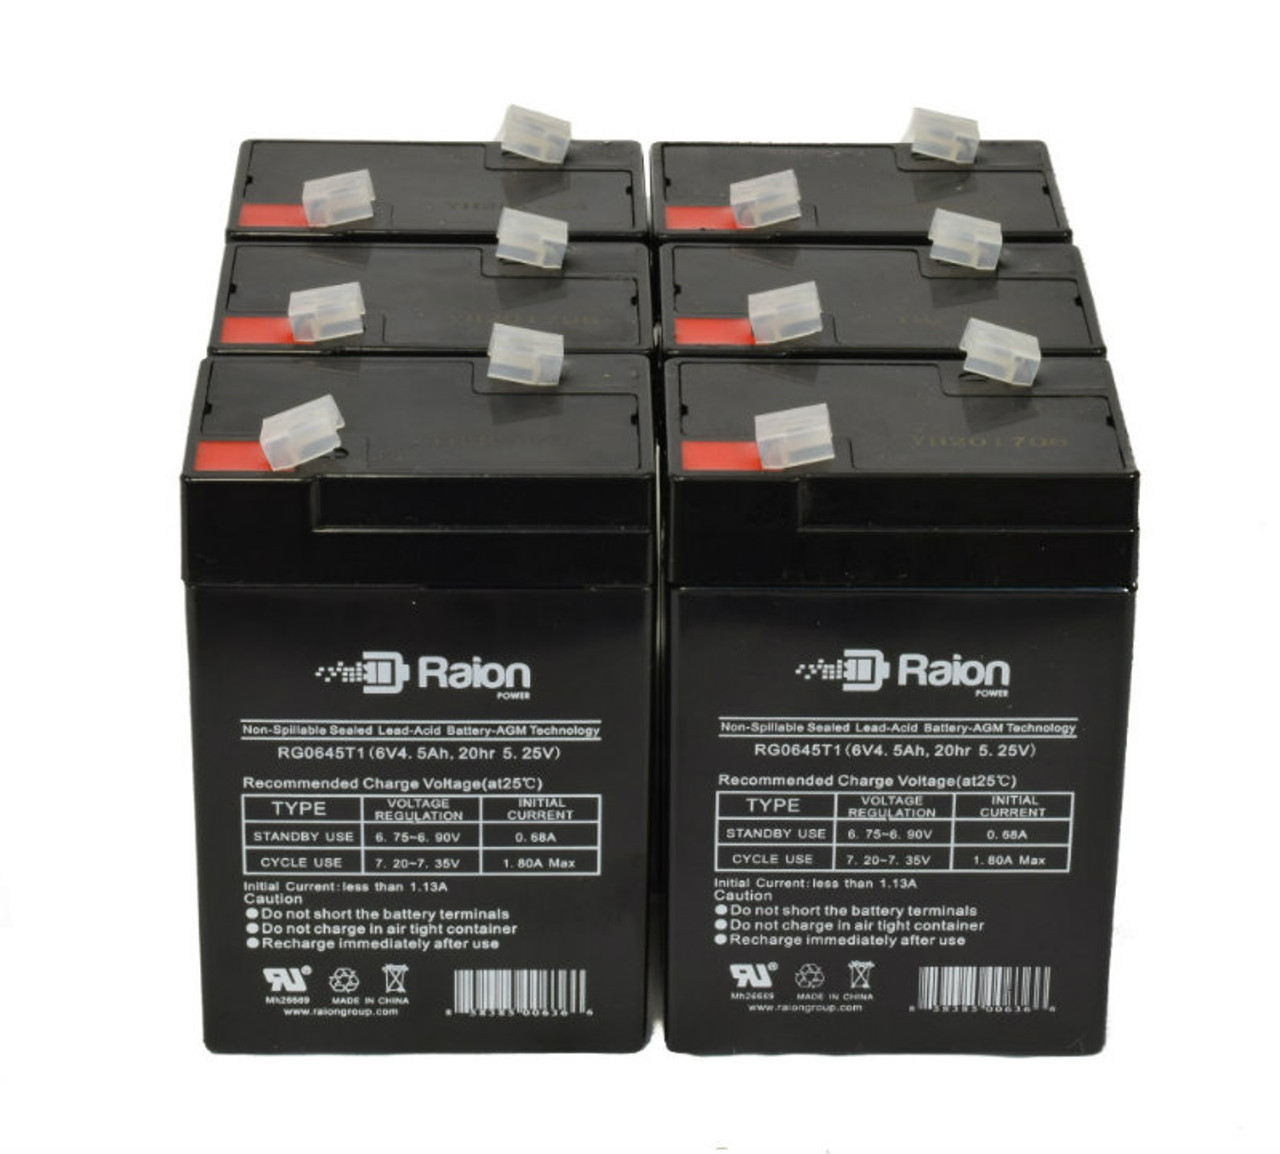 Raion Power RG0645T1 6V 4.5Ah Replacement Medical Equipment Battery for Picker International 502 - 6 Pack